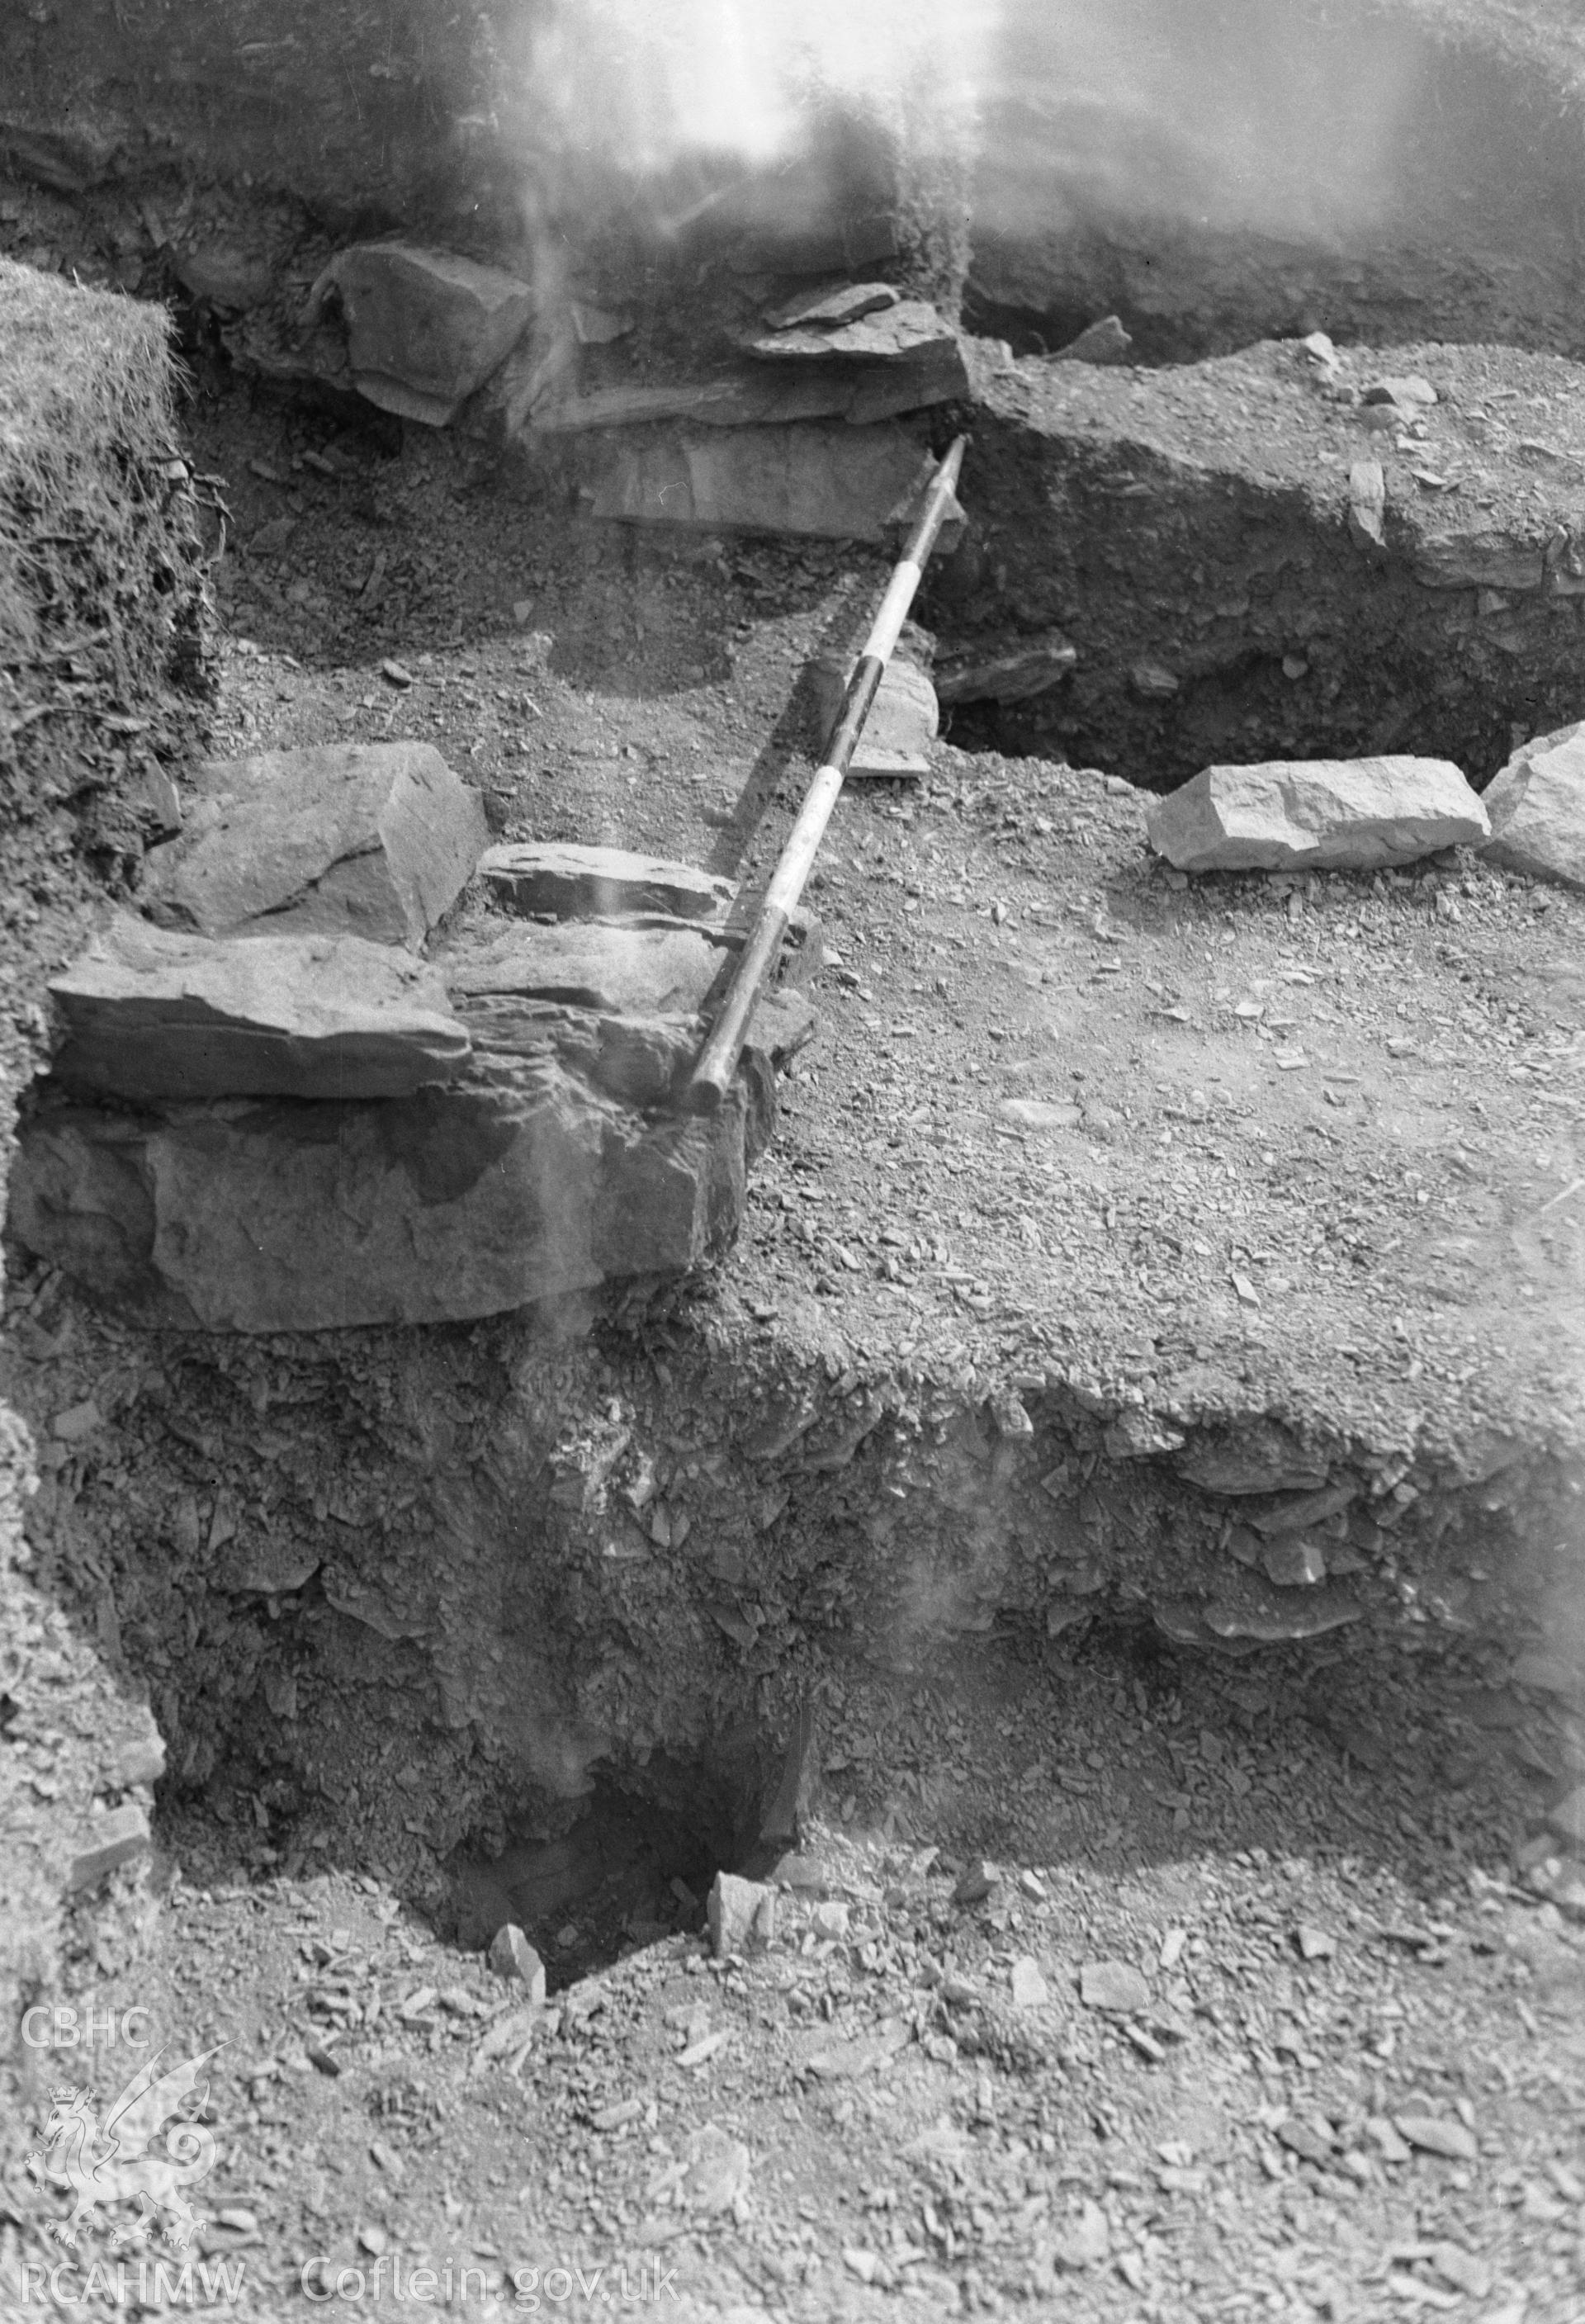 View showing excavation in progress.